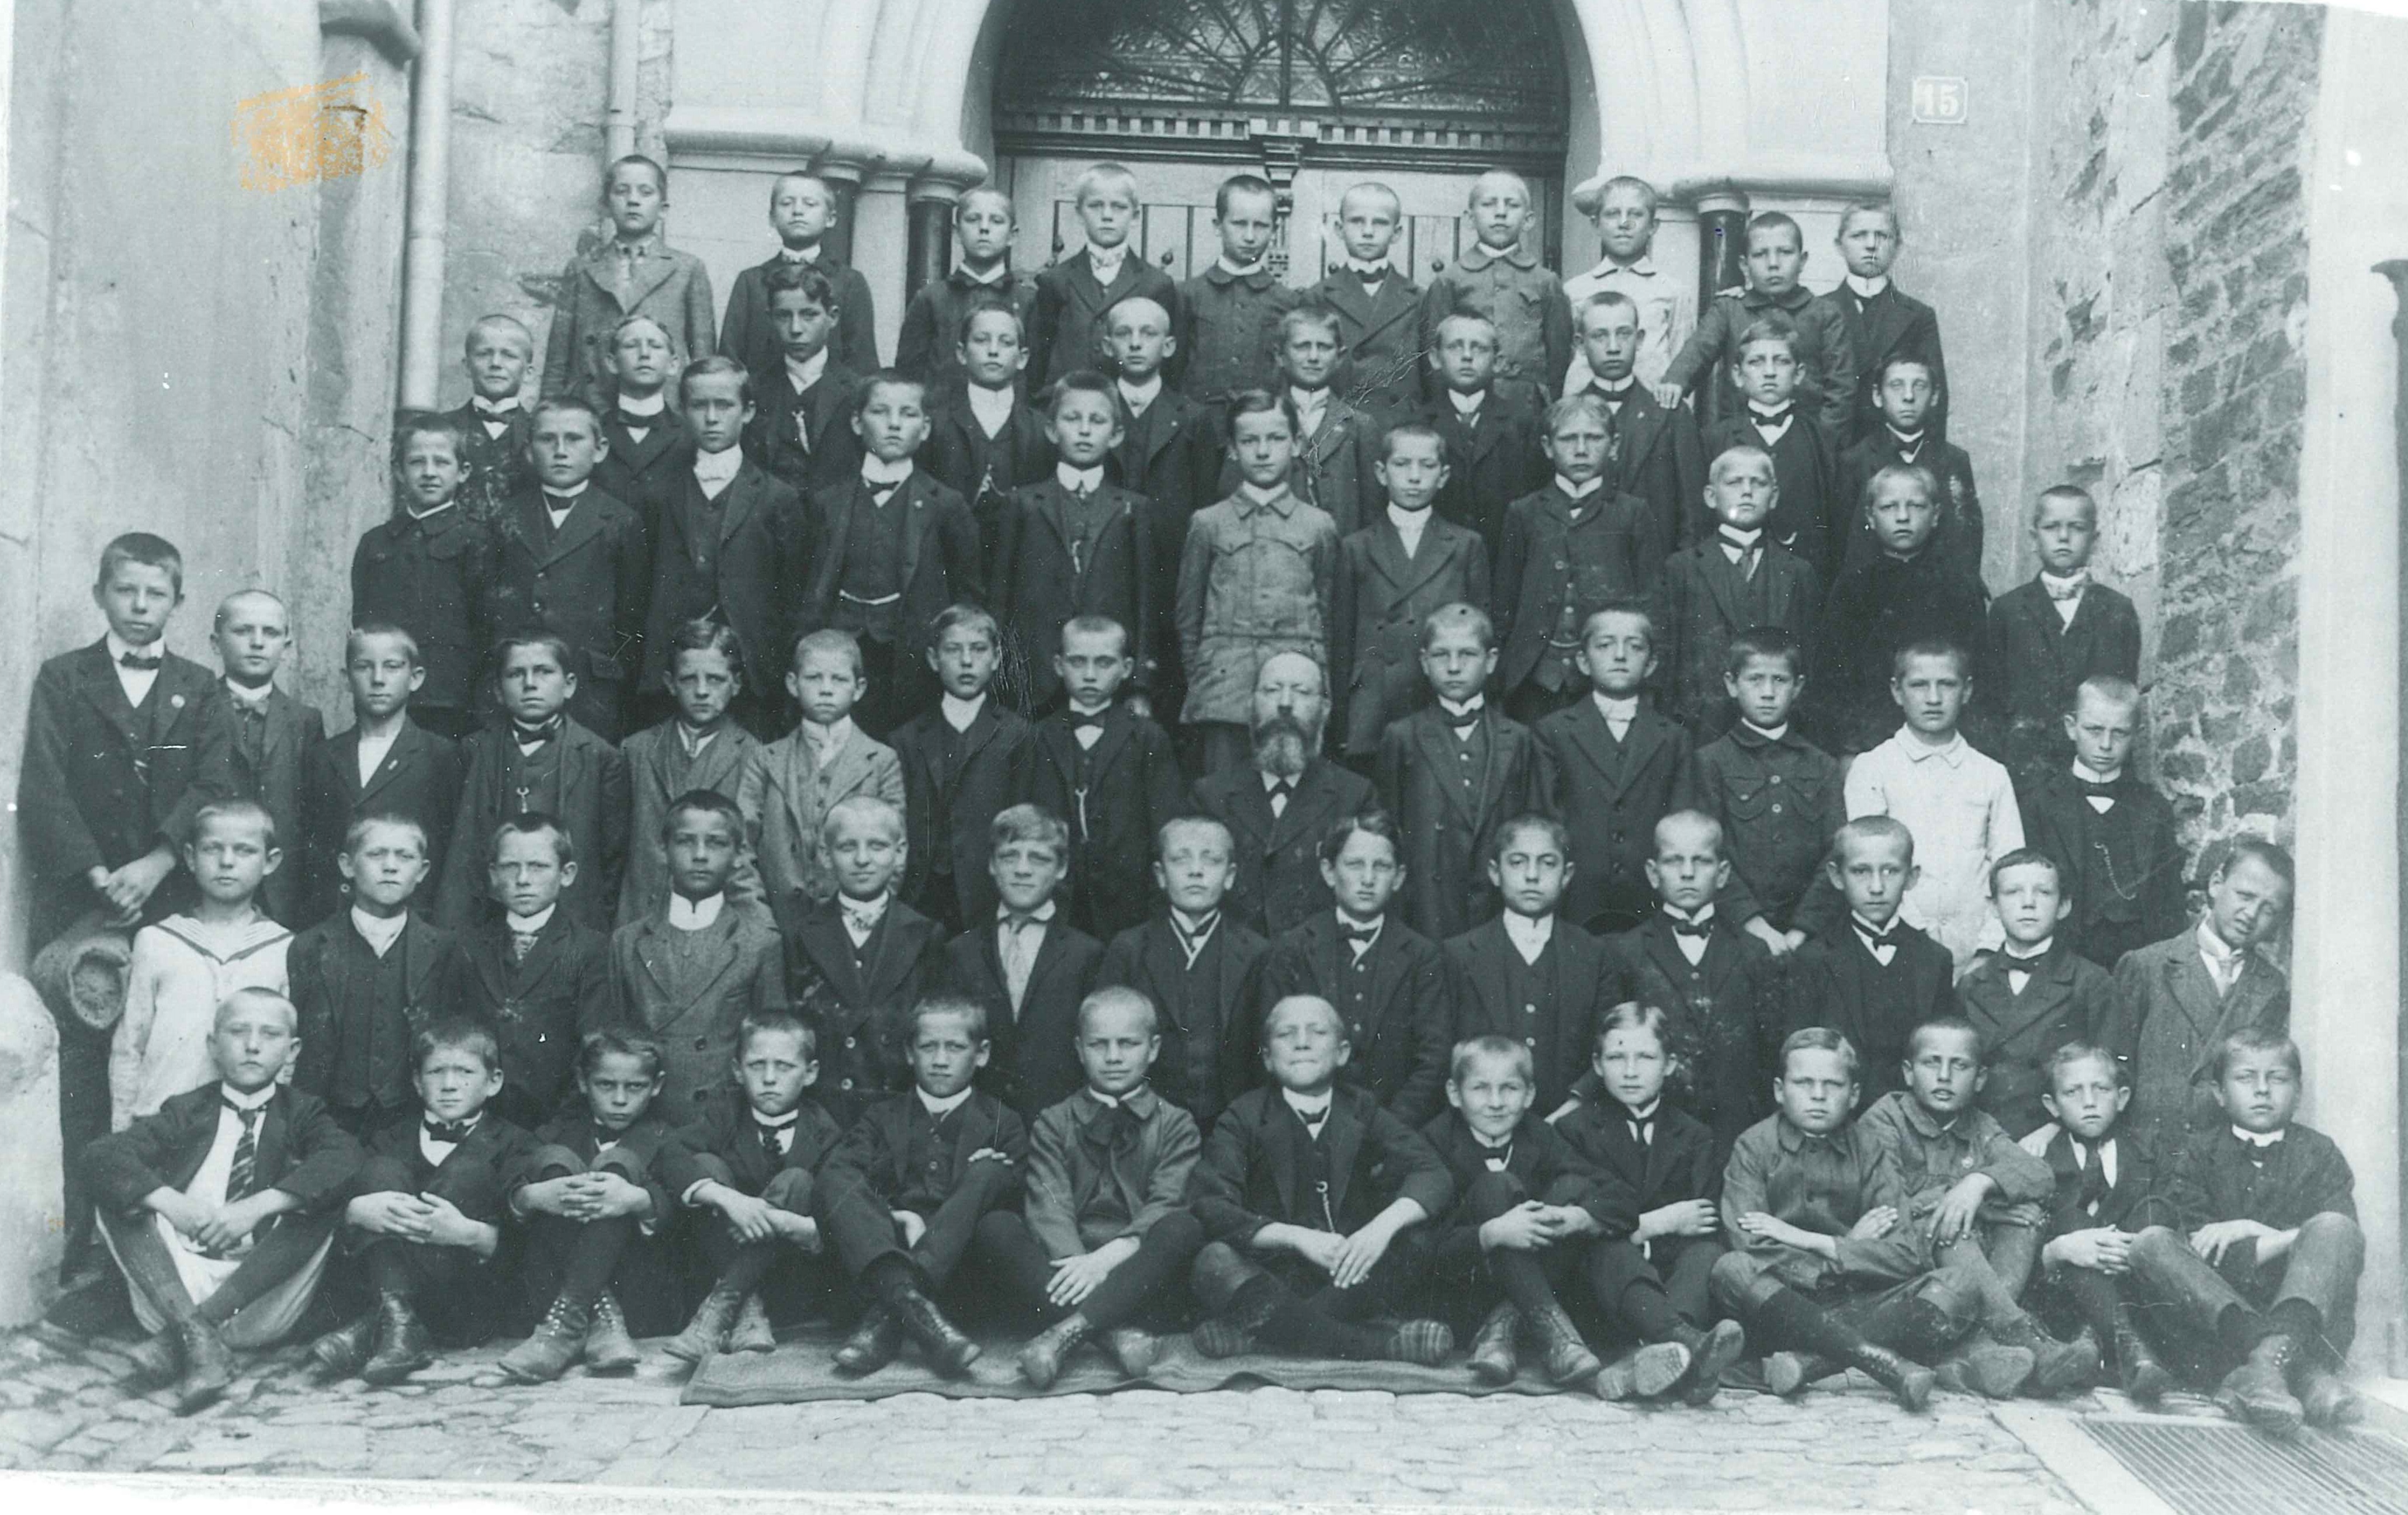 Katholische Knabenschule Bendorf, Klassenfoto 1907/08 (REM CC BY-NC-SA)